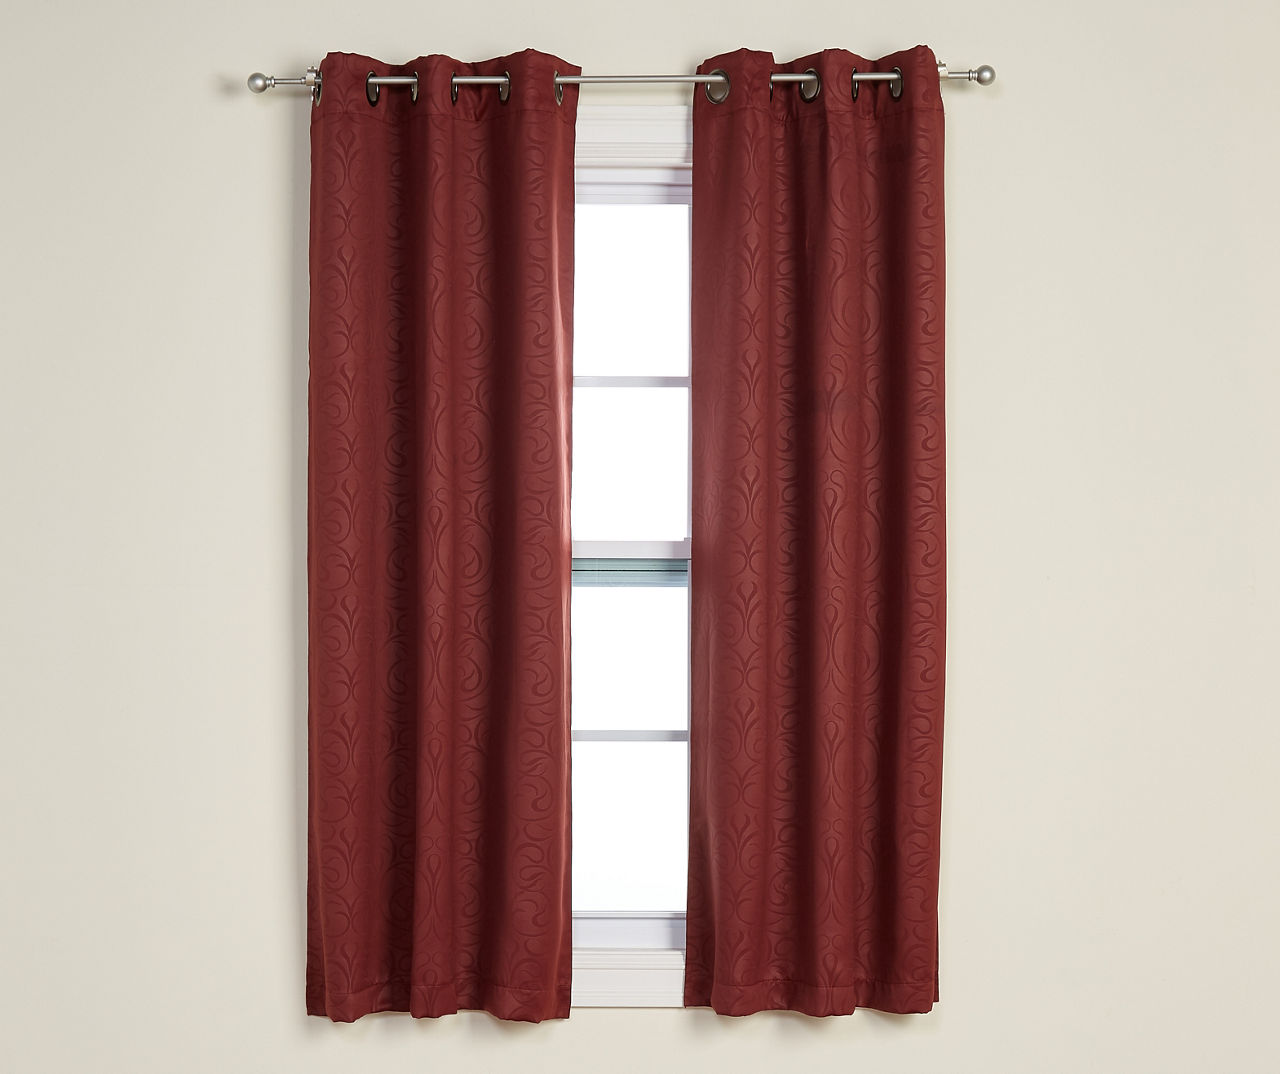 Cranberry Scroll Grommet Blackout Curtain Panel Pair, (63")